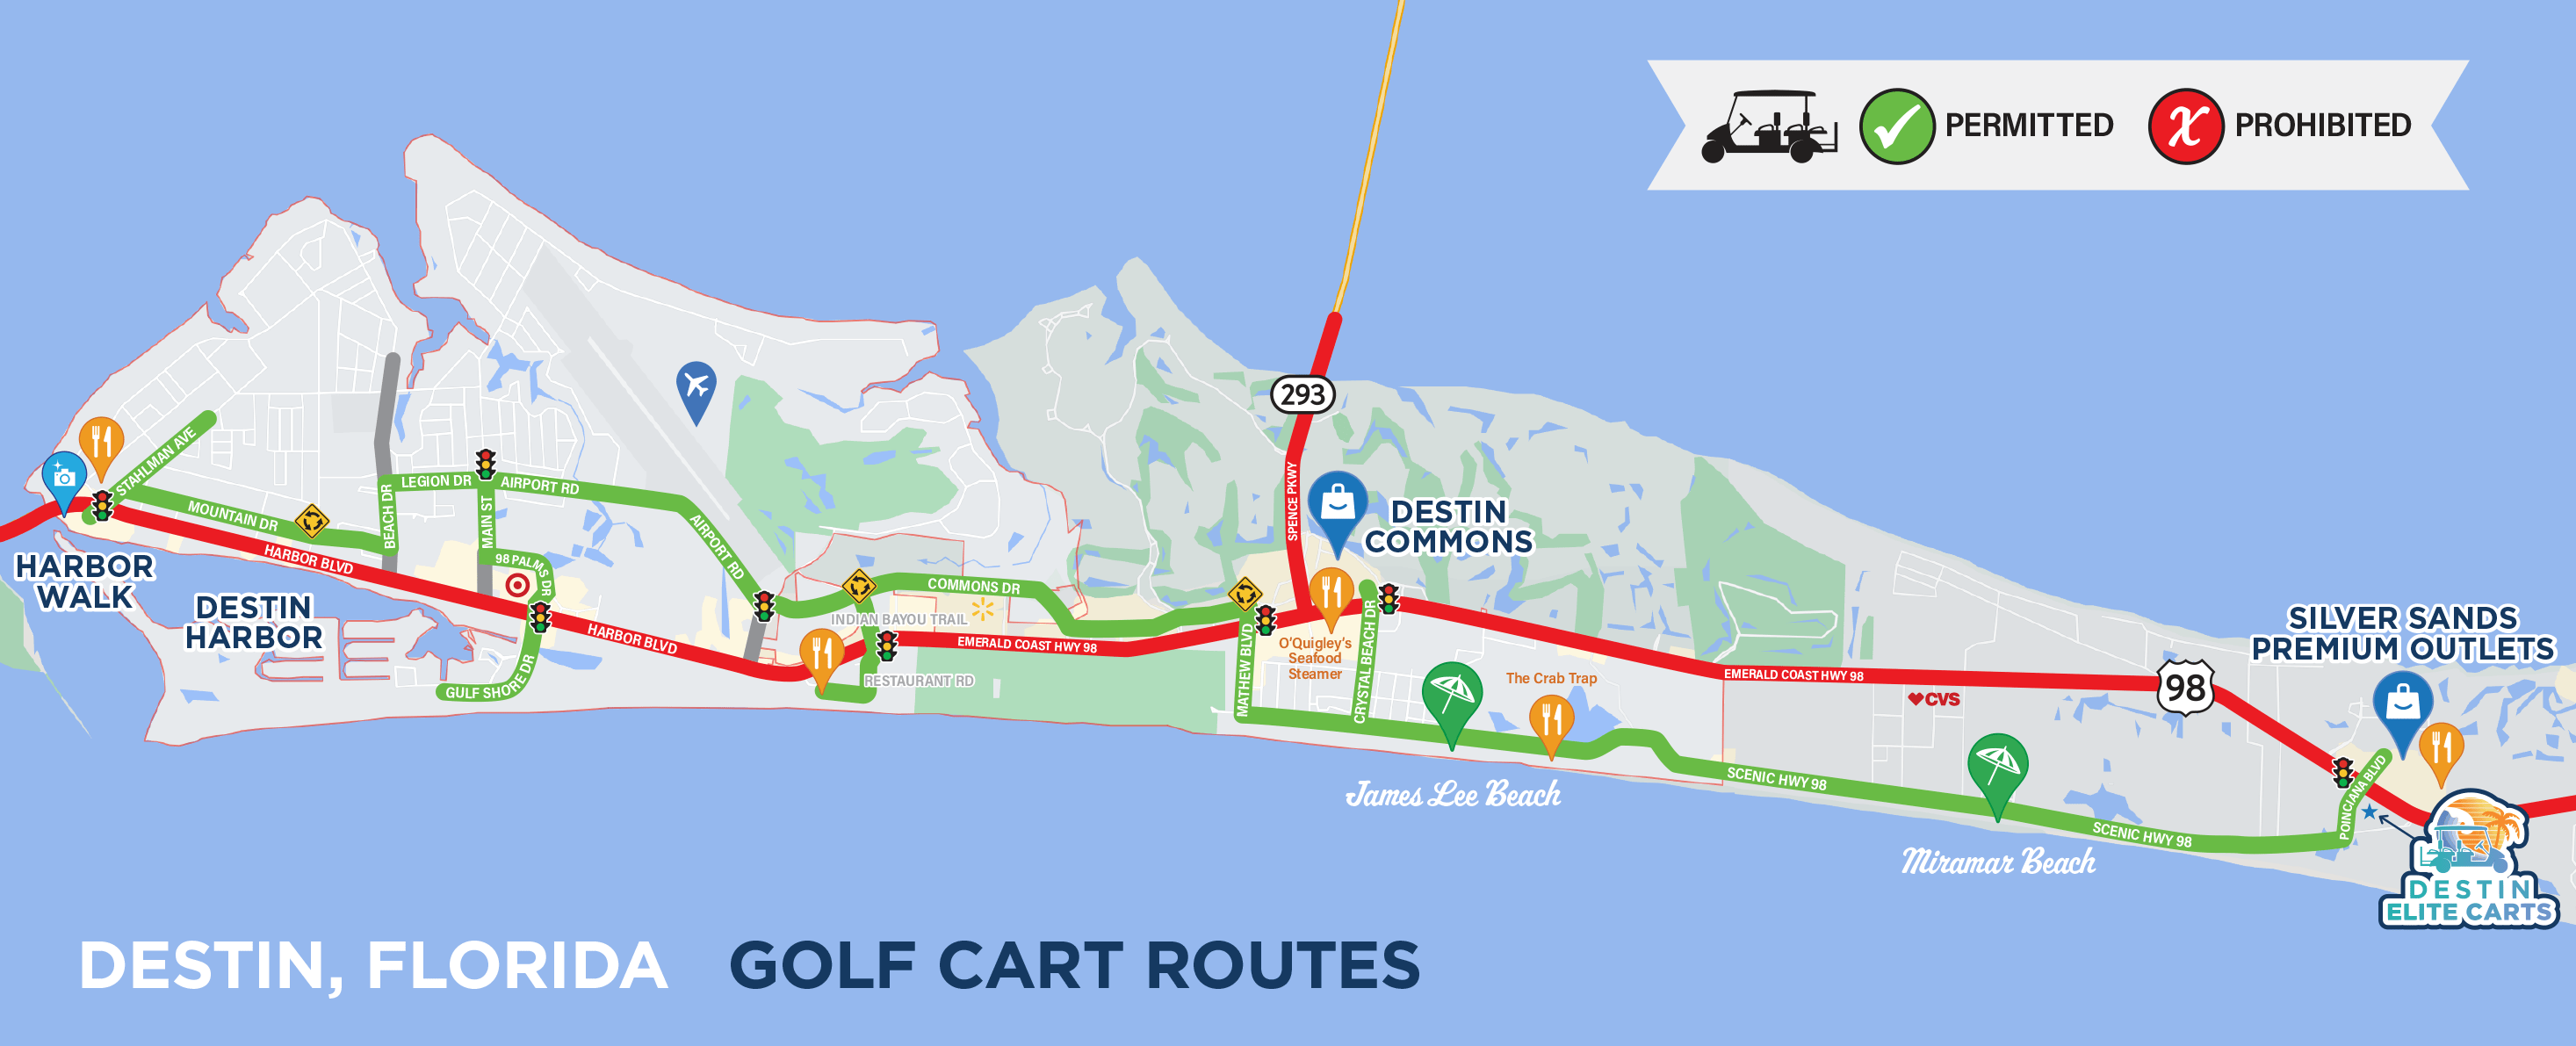 Destin Elite Carts Golf Cart Routes in Destin Florida